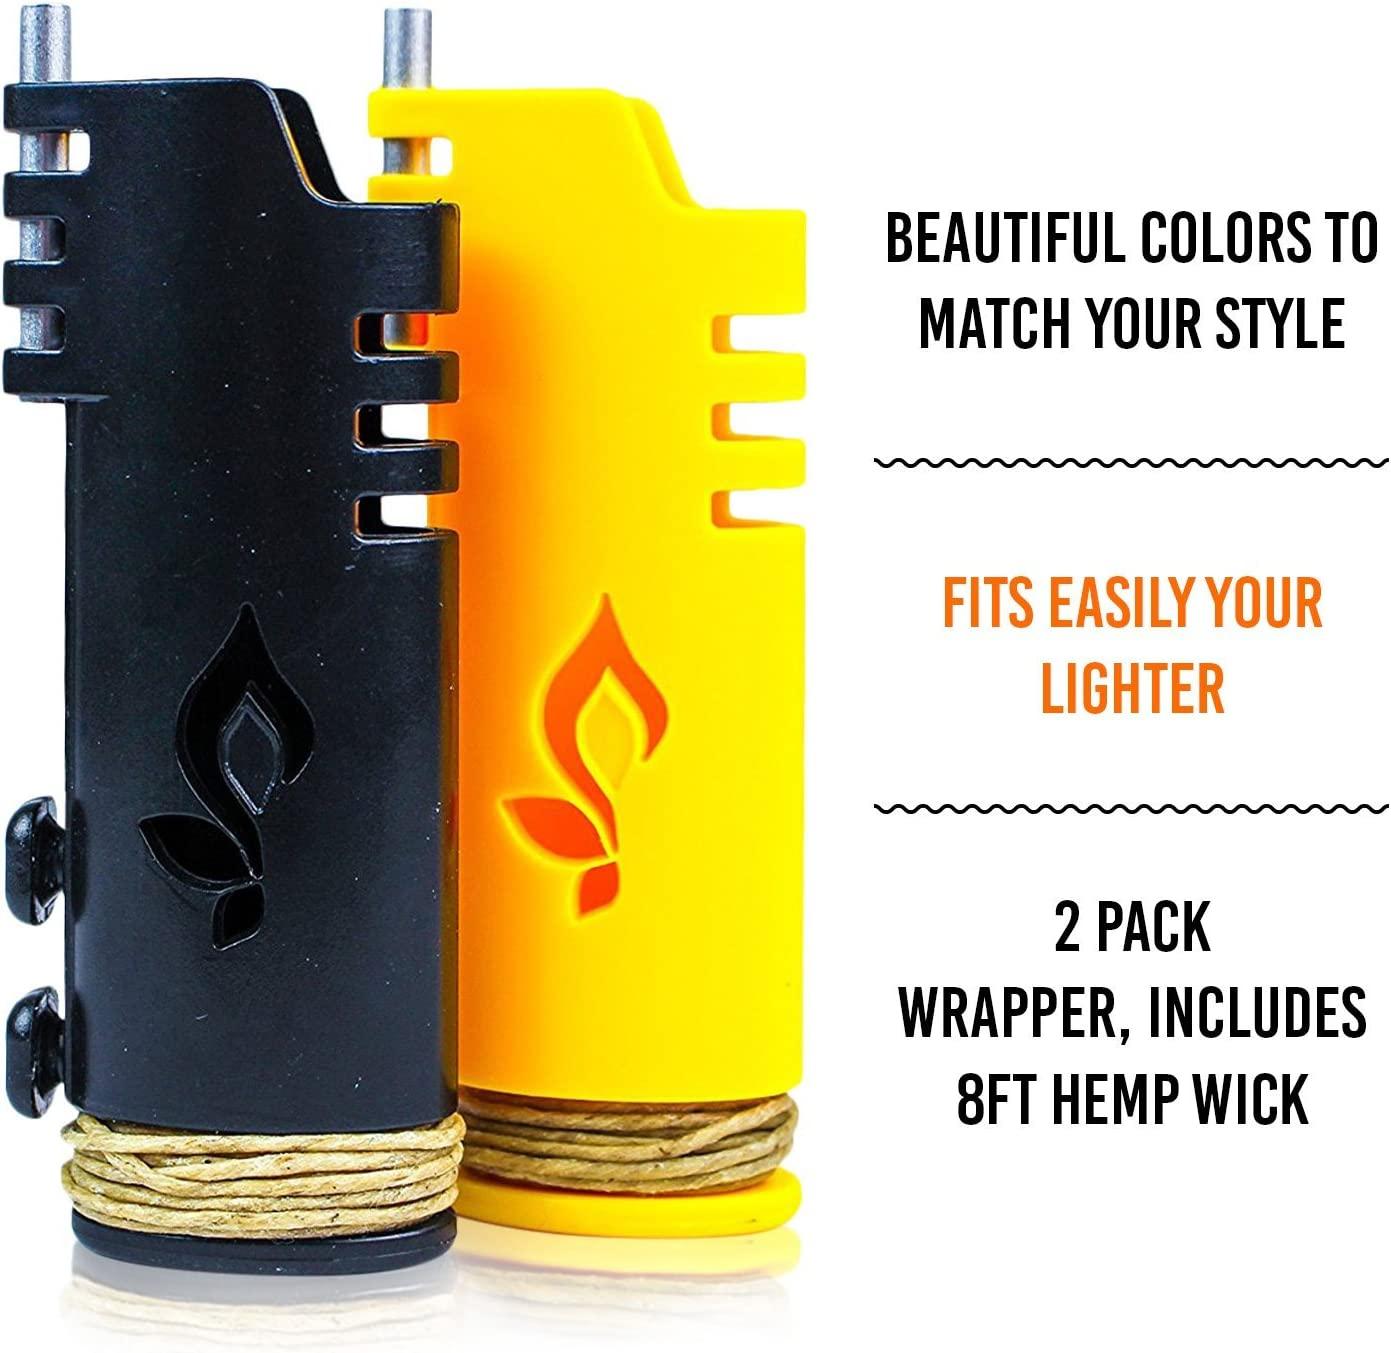 Hemp Wick Lighter 2 Pack Wrapper, Includes 8FT Hemp Wick by Hemplights USA  (Black/Grey) Black/Gray